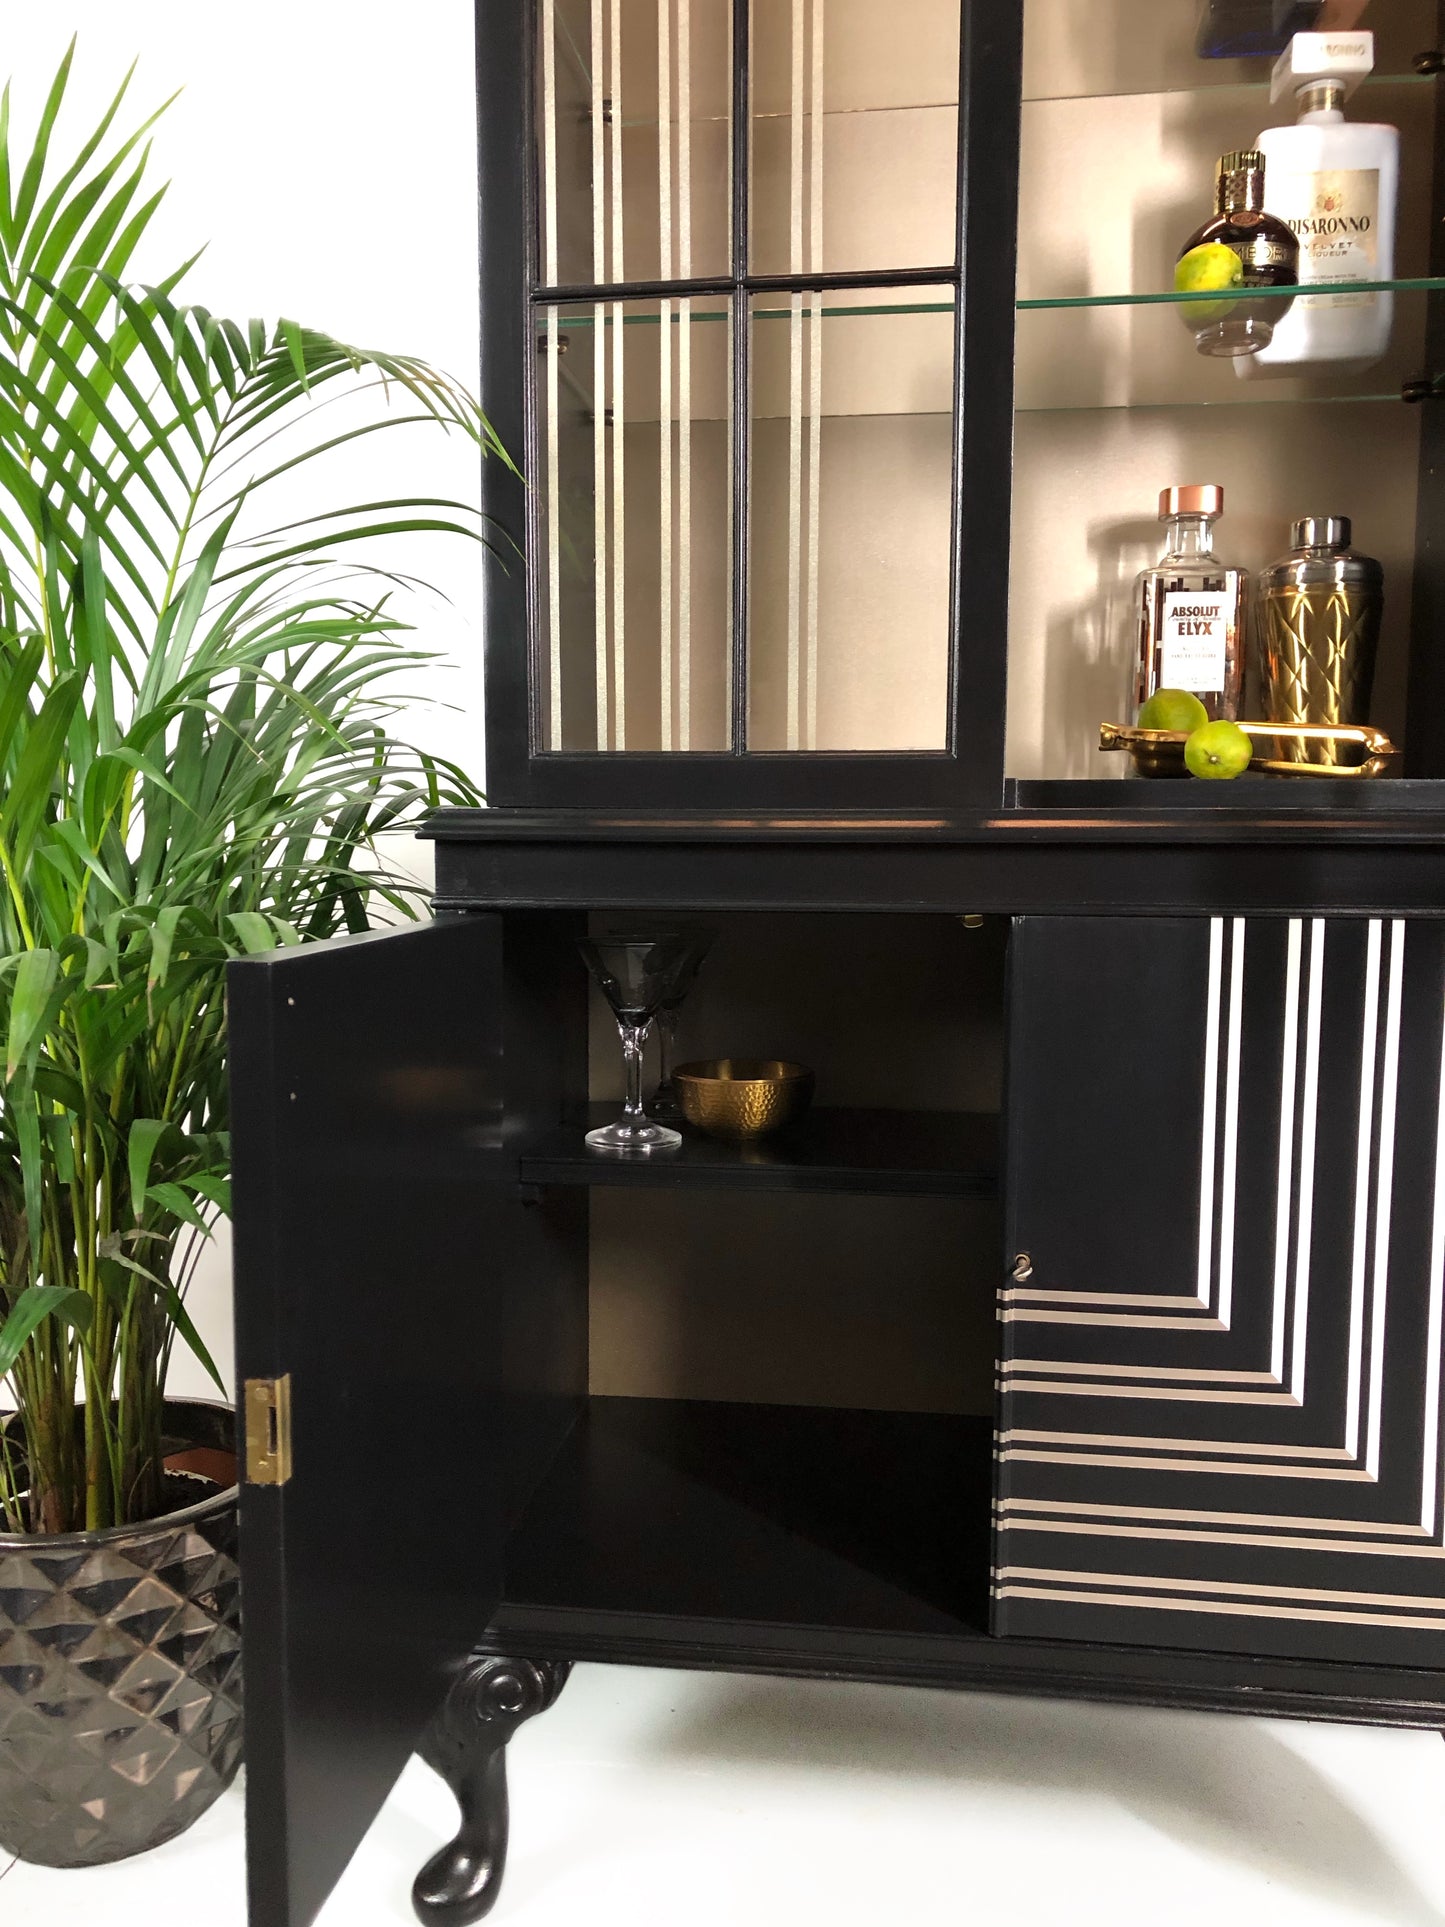 'Mod' - Drinks Cabinet with monochrome geometric design